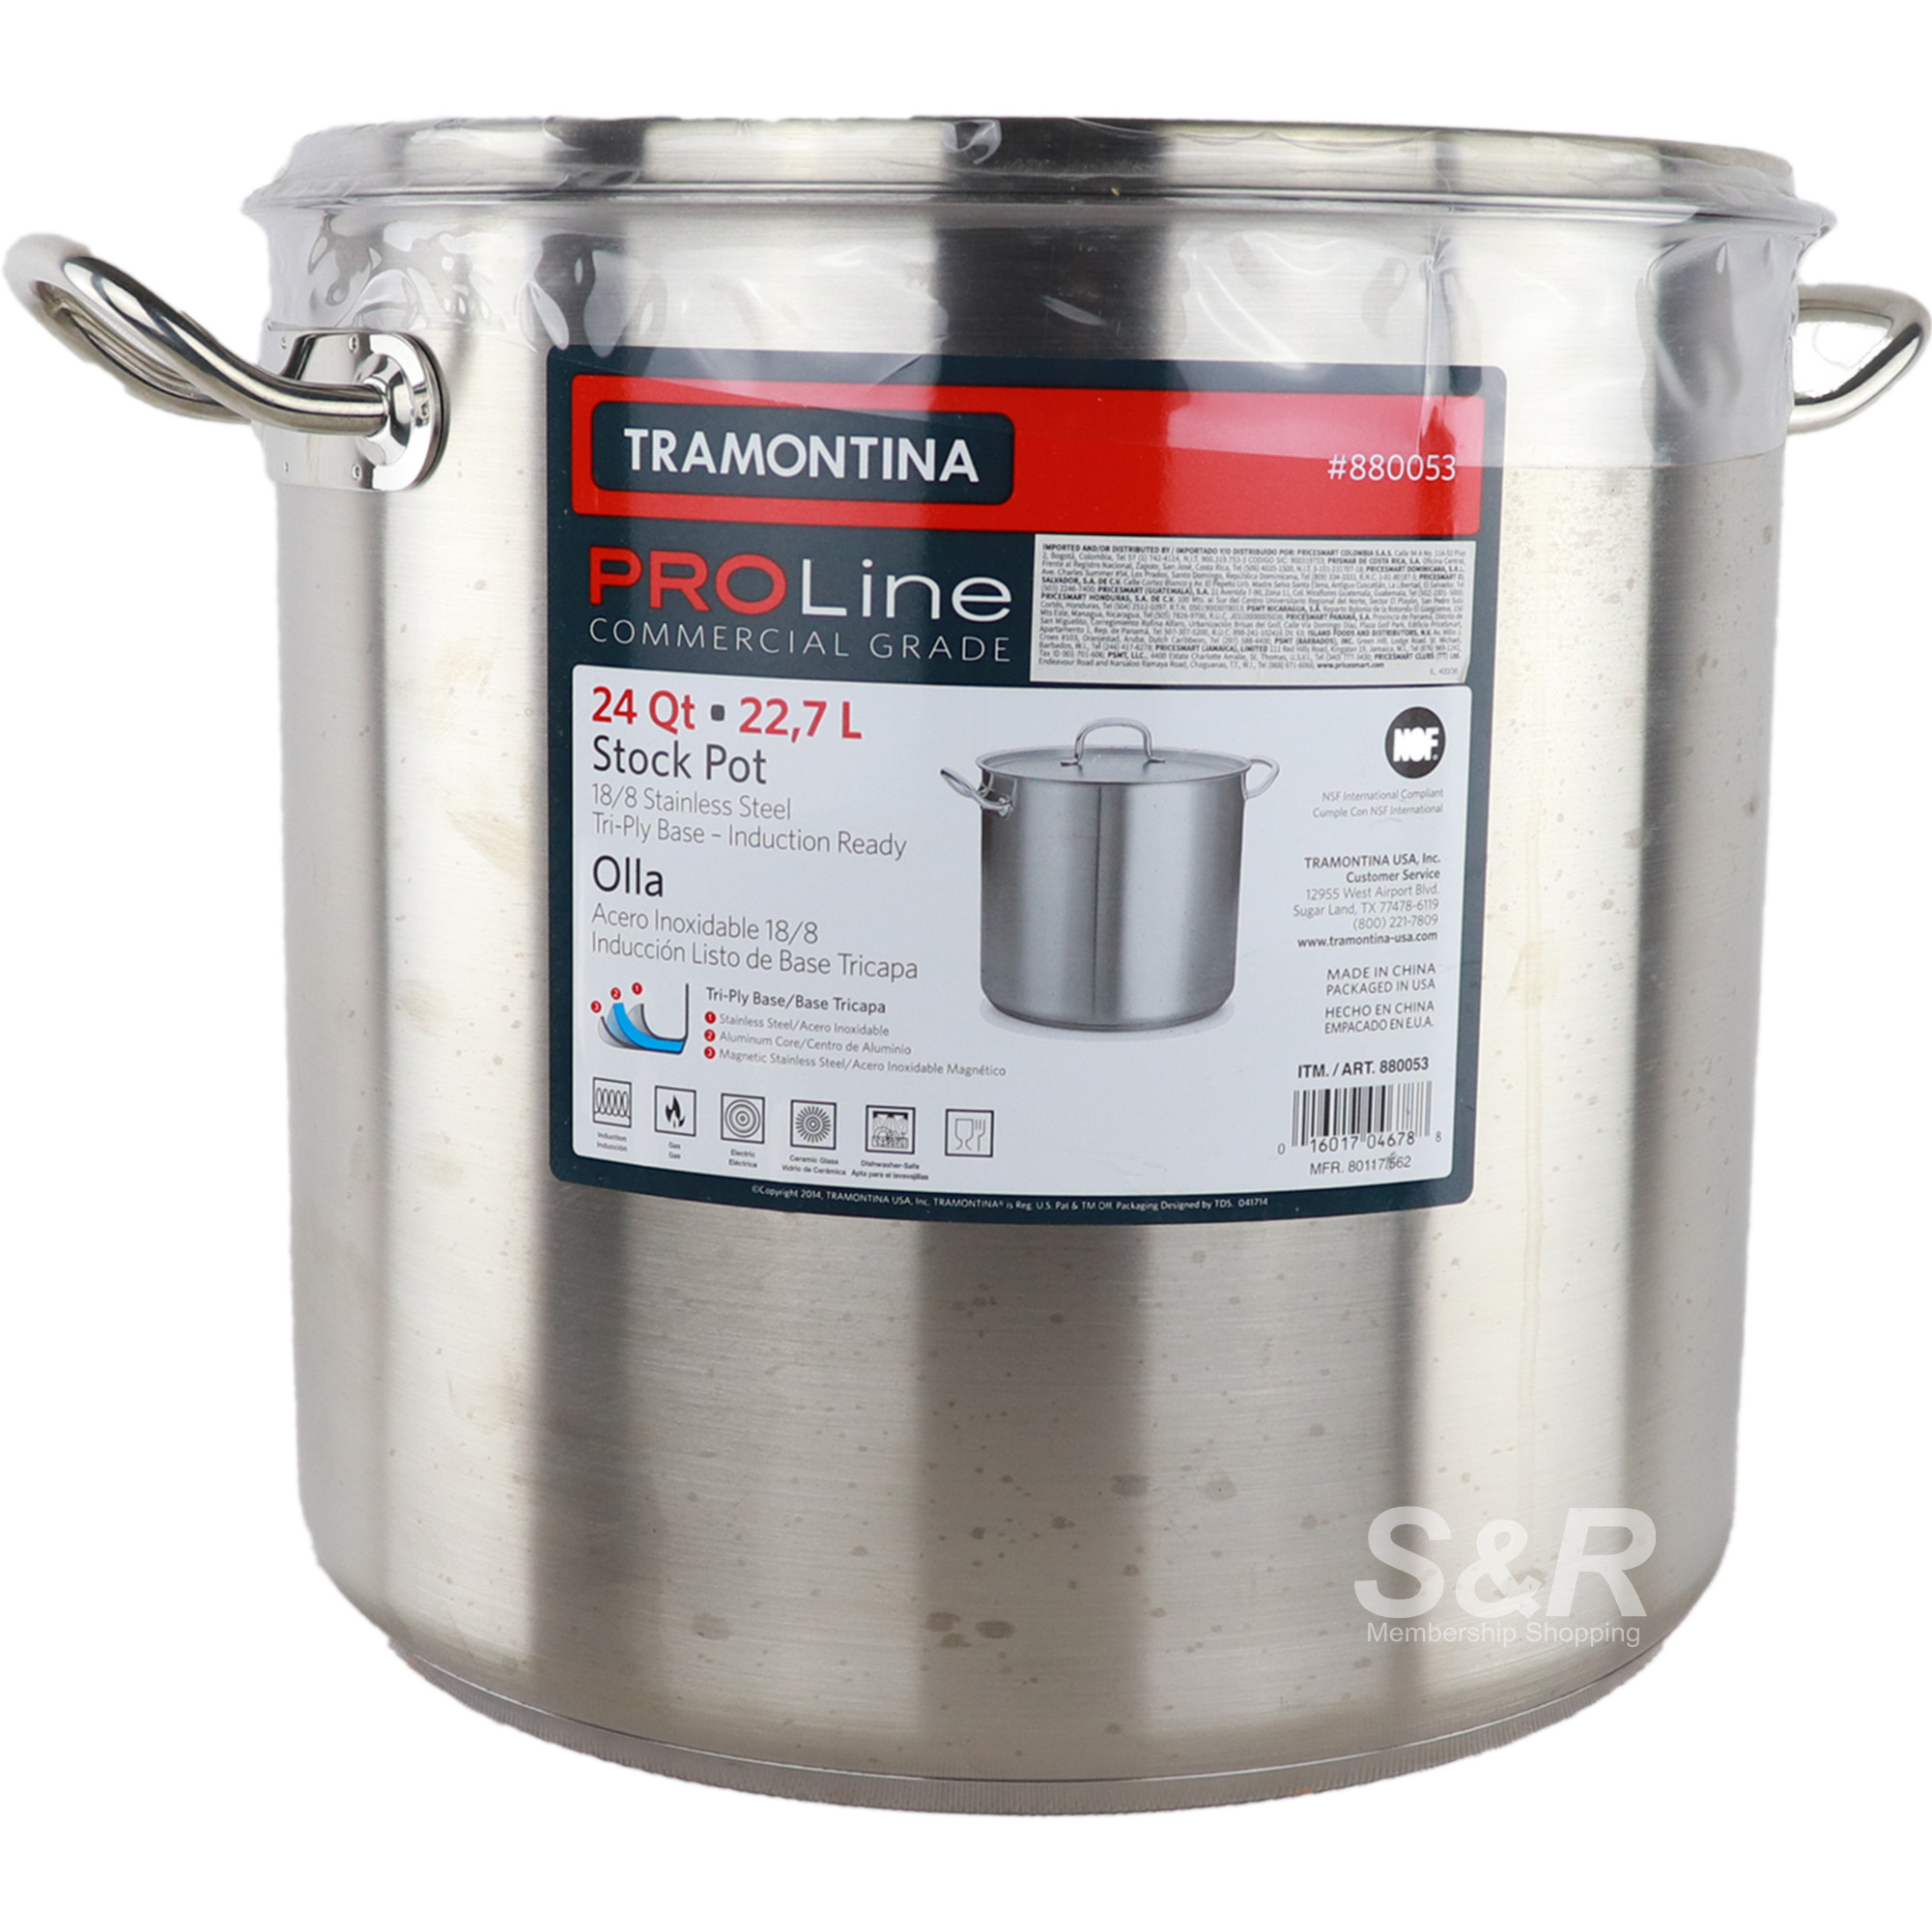 Tramontina ProLine Covered Stock Pot 22.7L